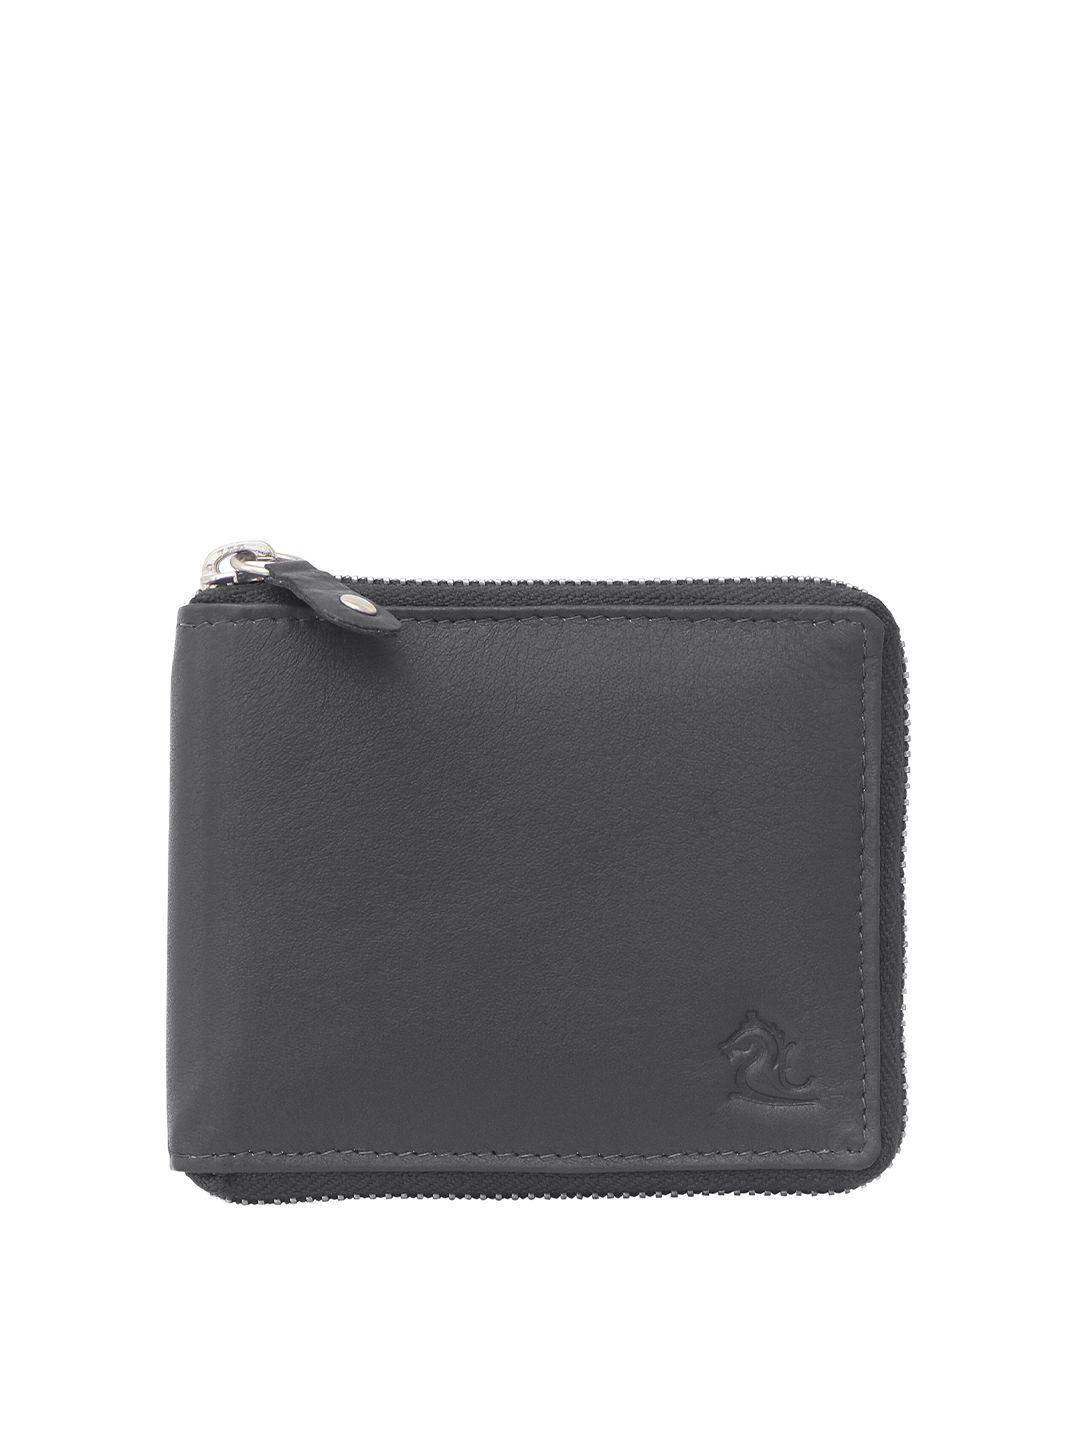 kara men leather zip around wallet